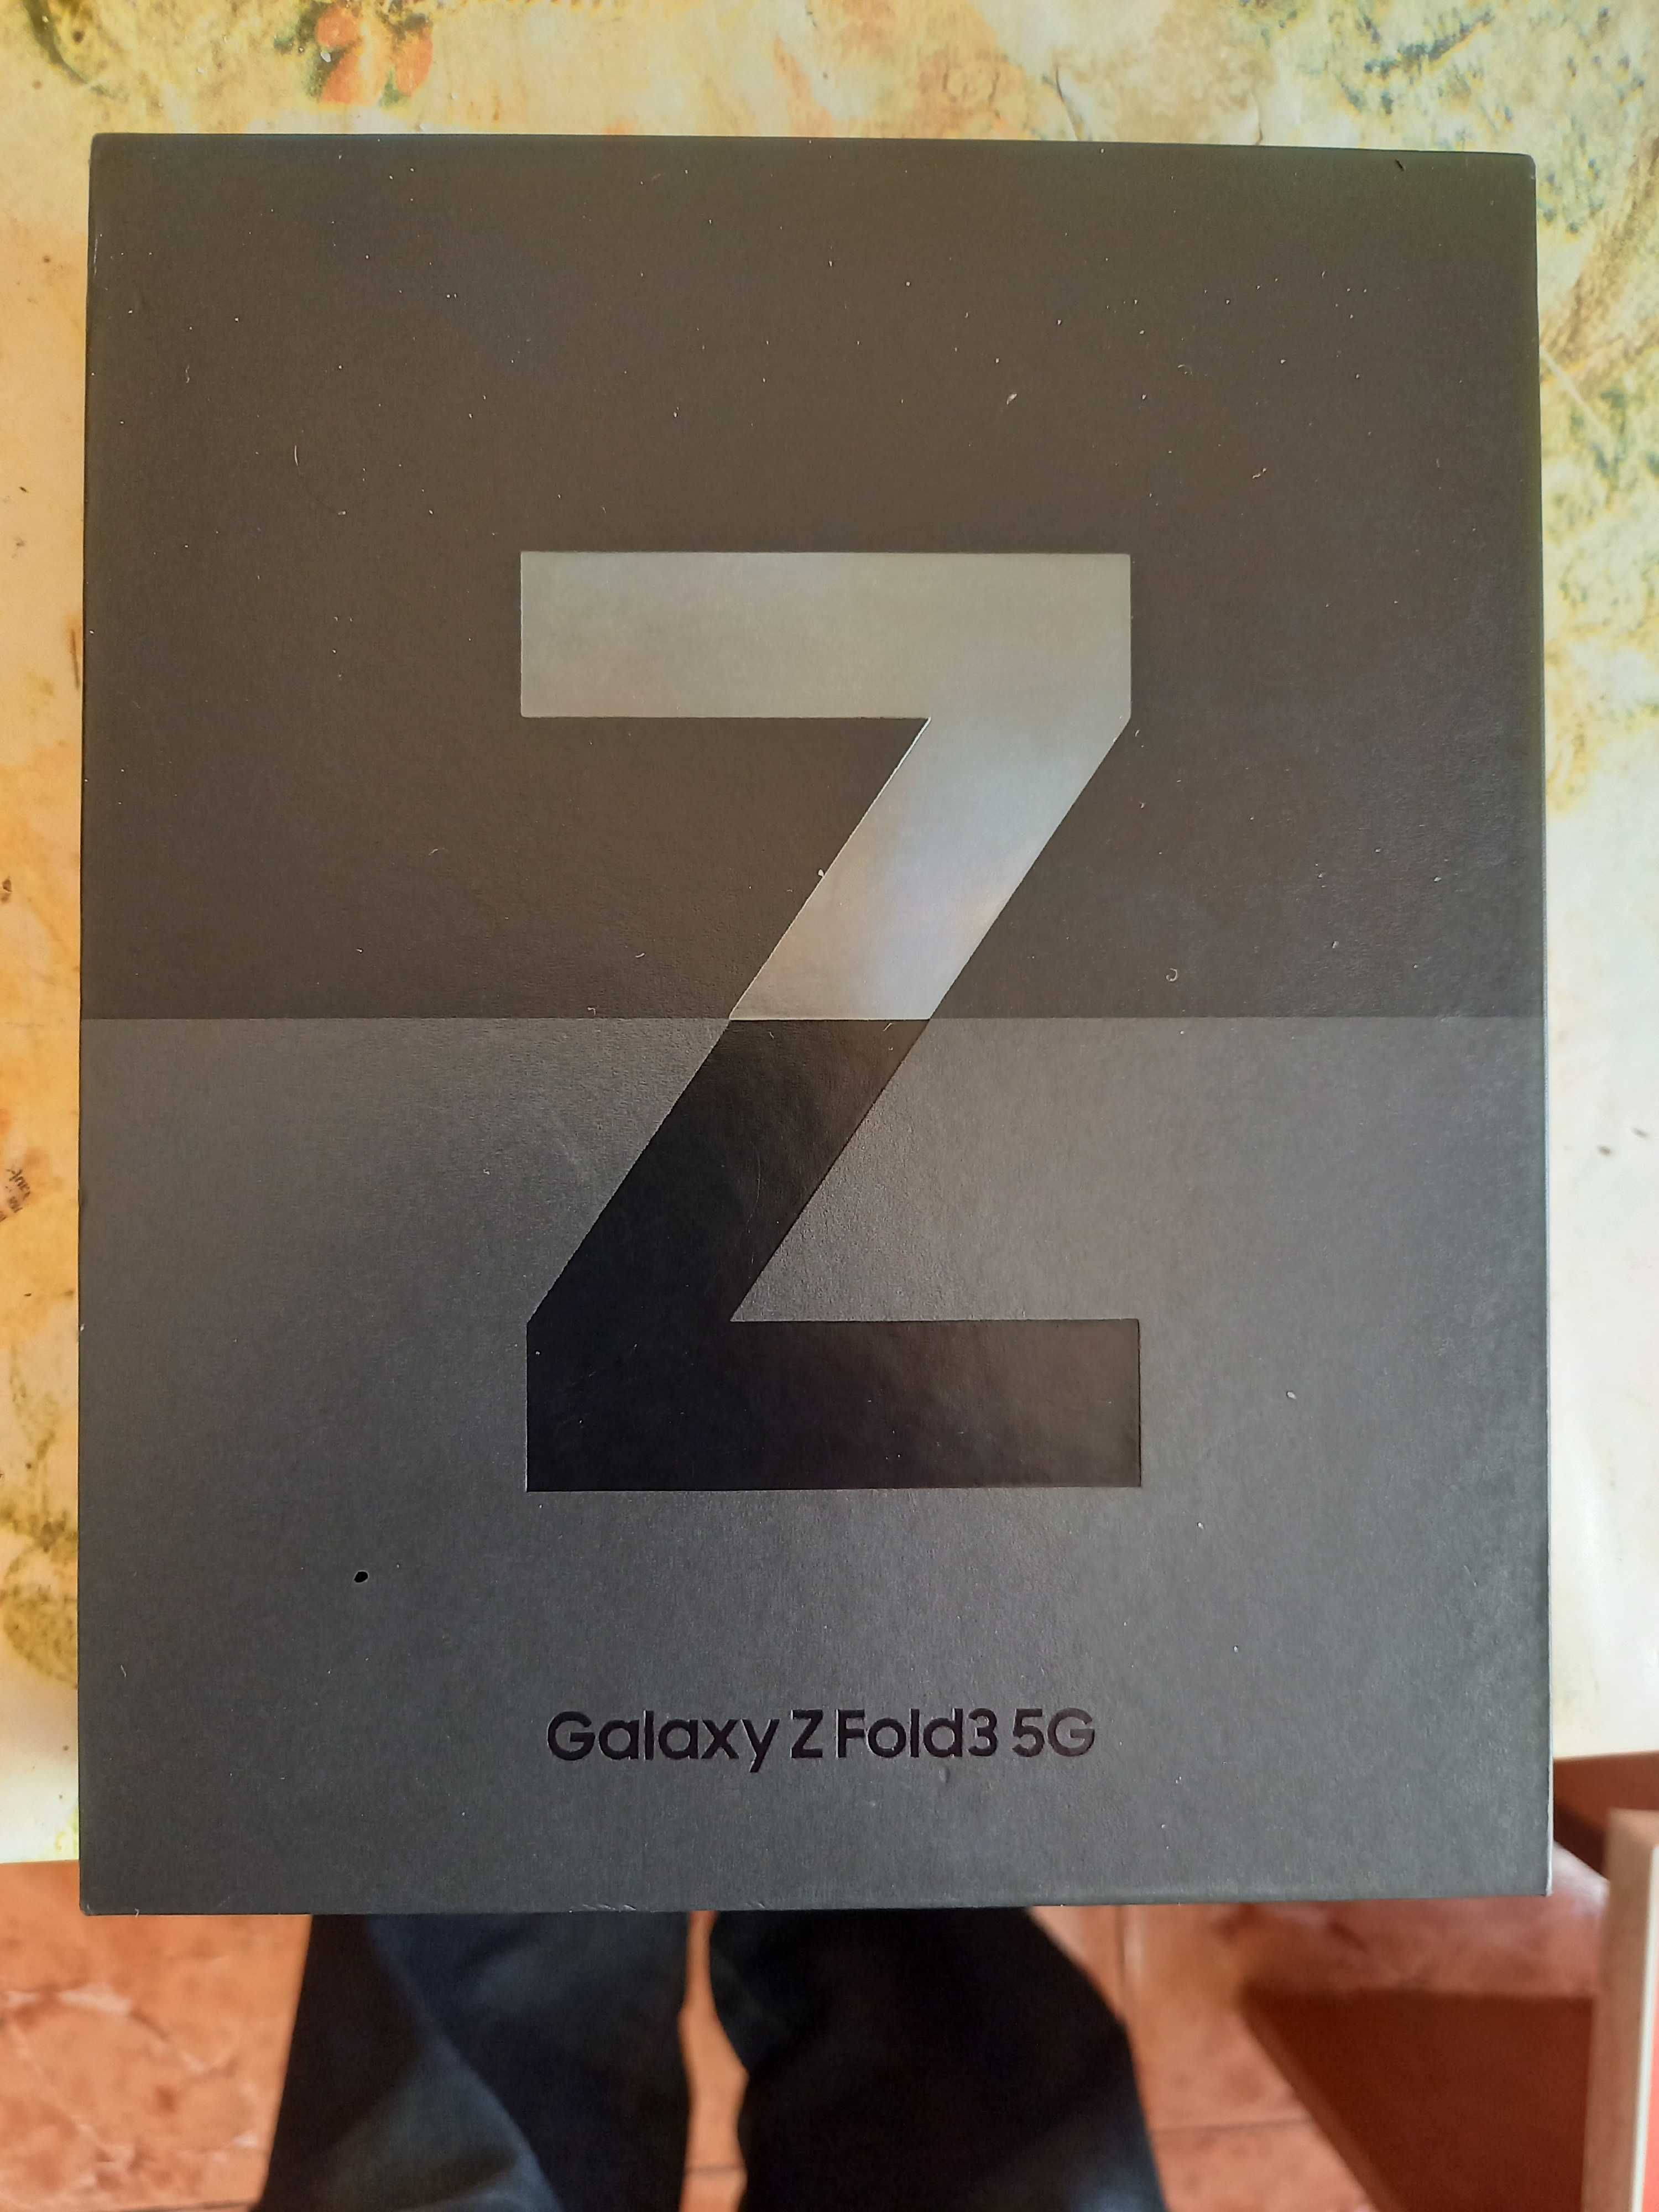 Galaxy Z fold3 5G nou nout